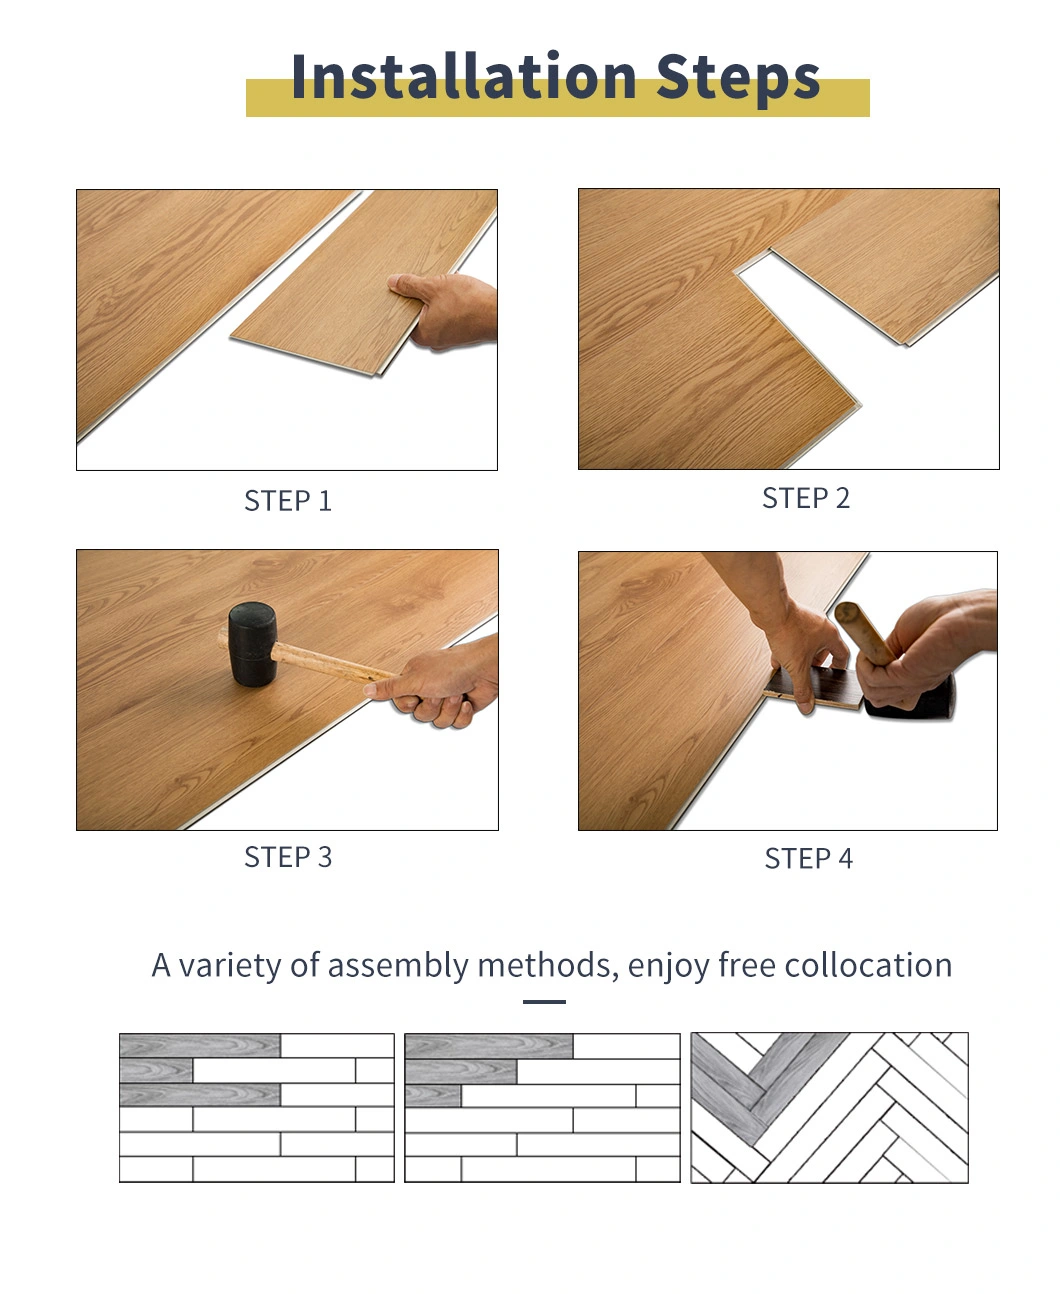 Wood Series PVC Flooring Plank Plastic PVC / Spc / Vinyl Flooring